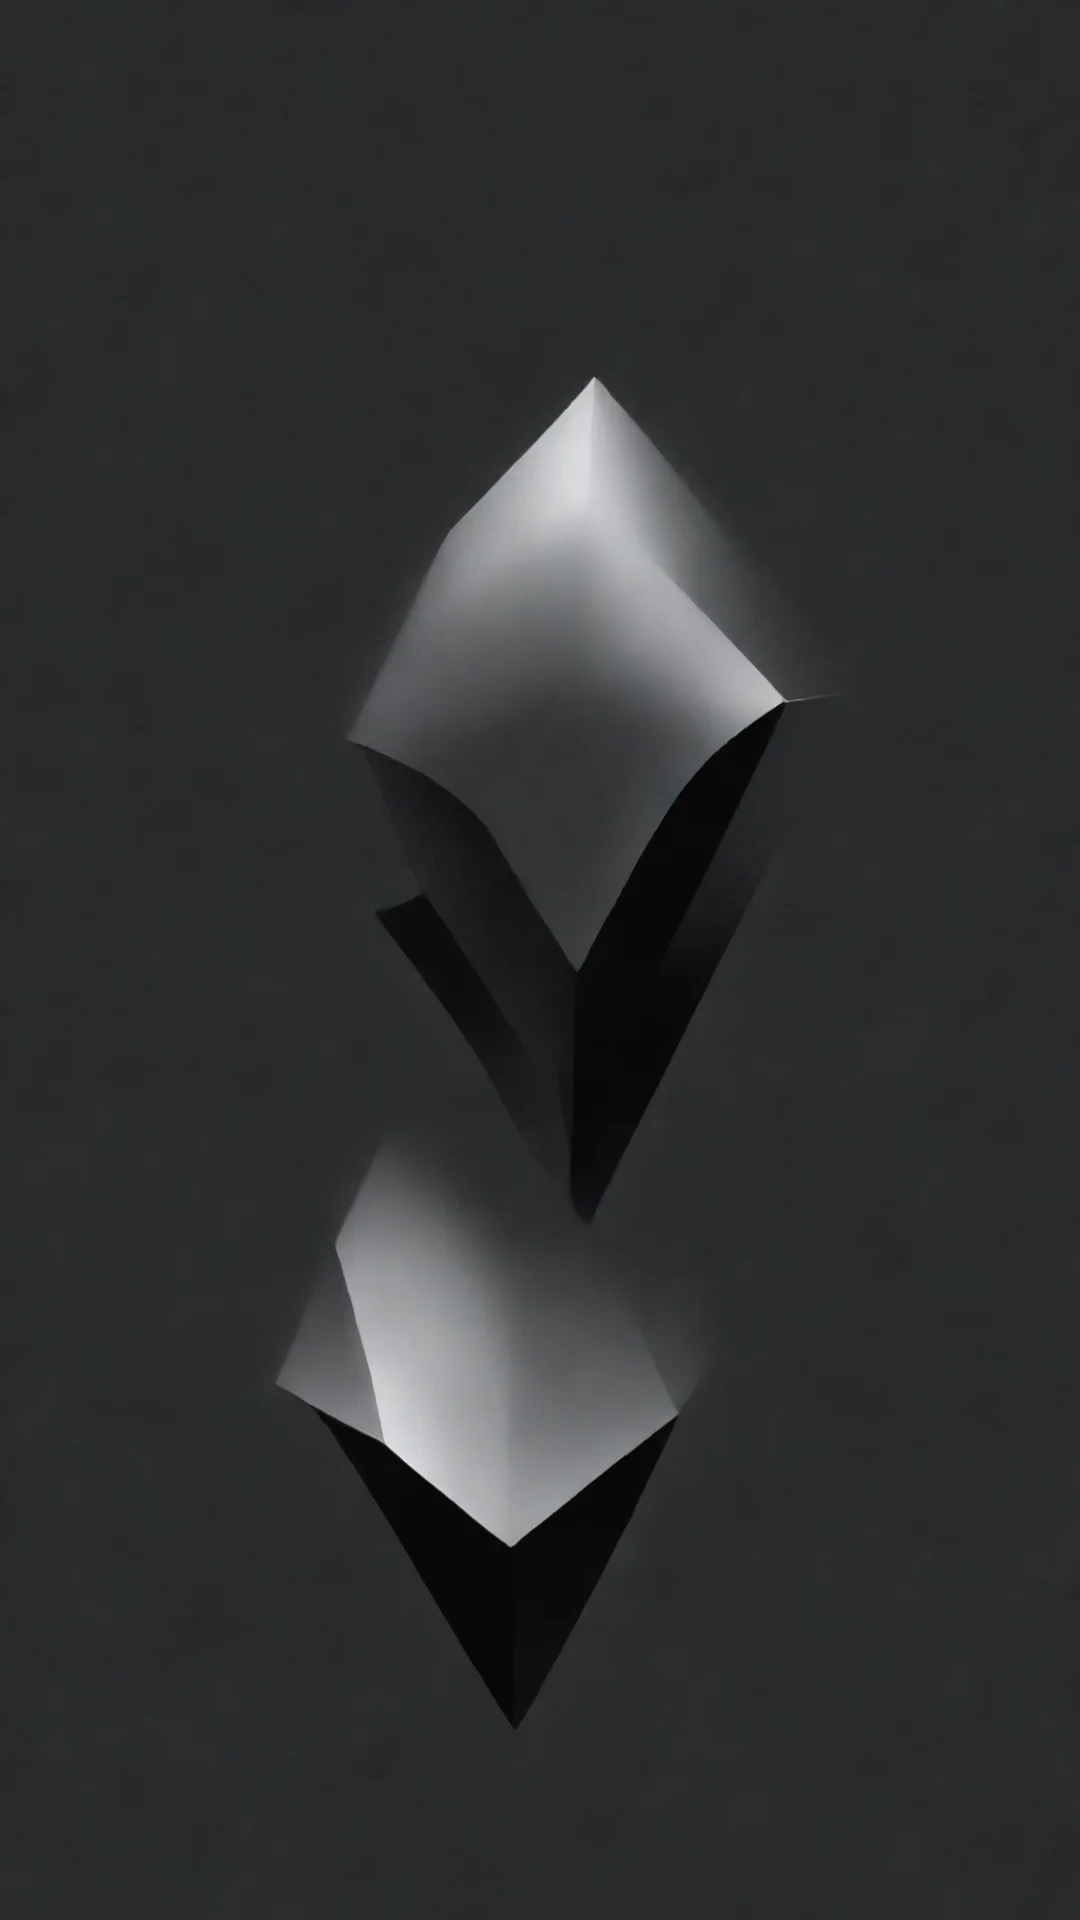 aiartstation art black diamond logo confident engaging wow 3 tall